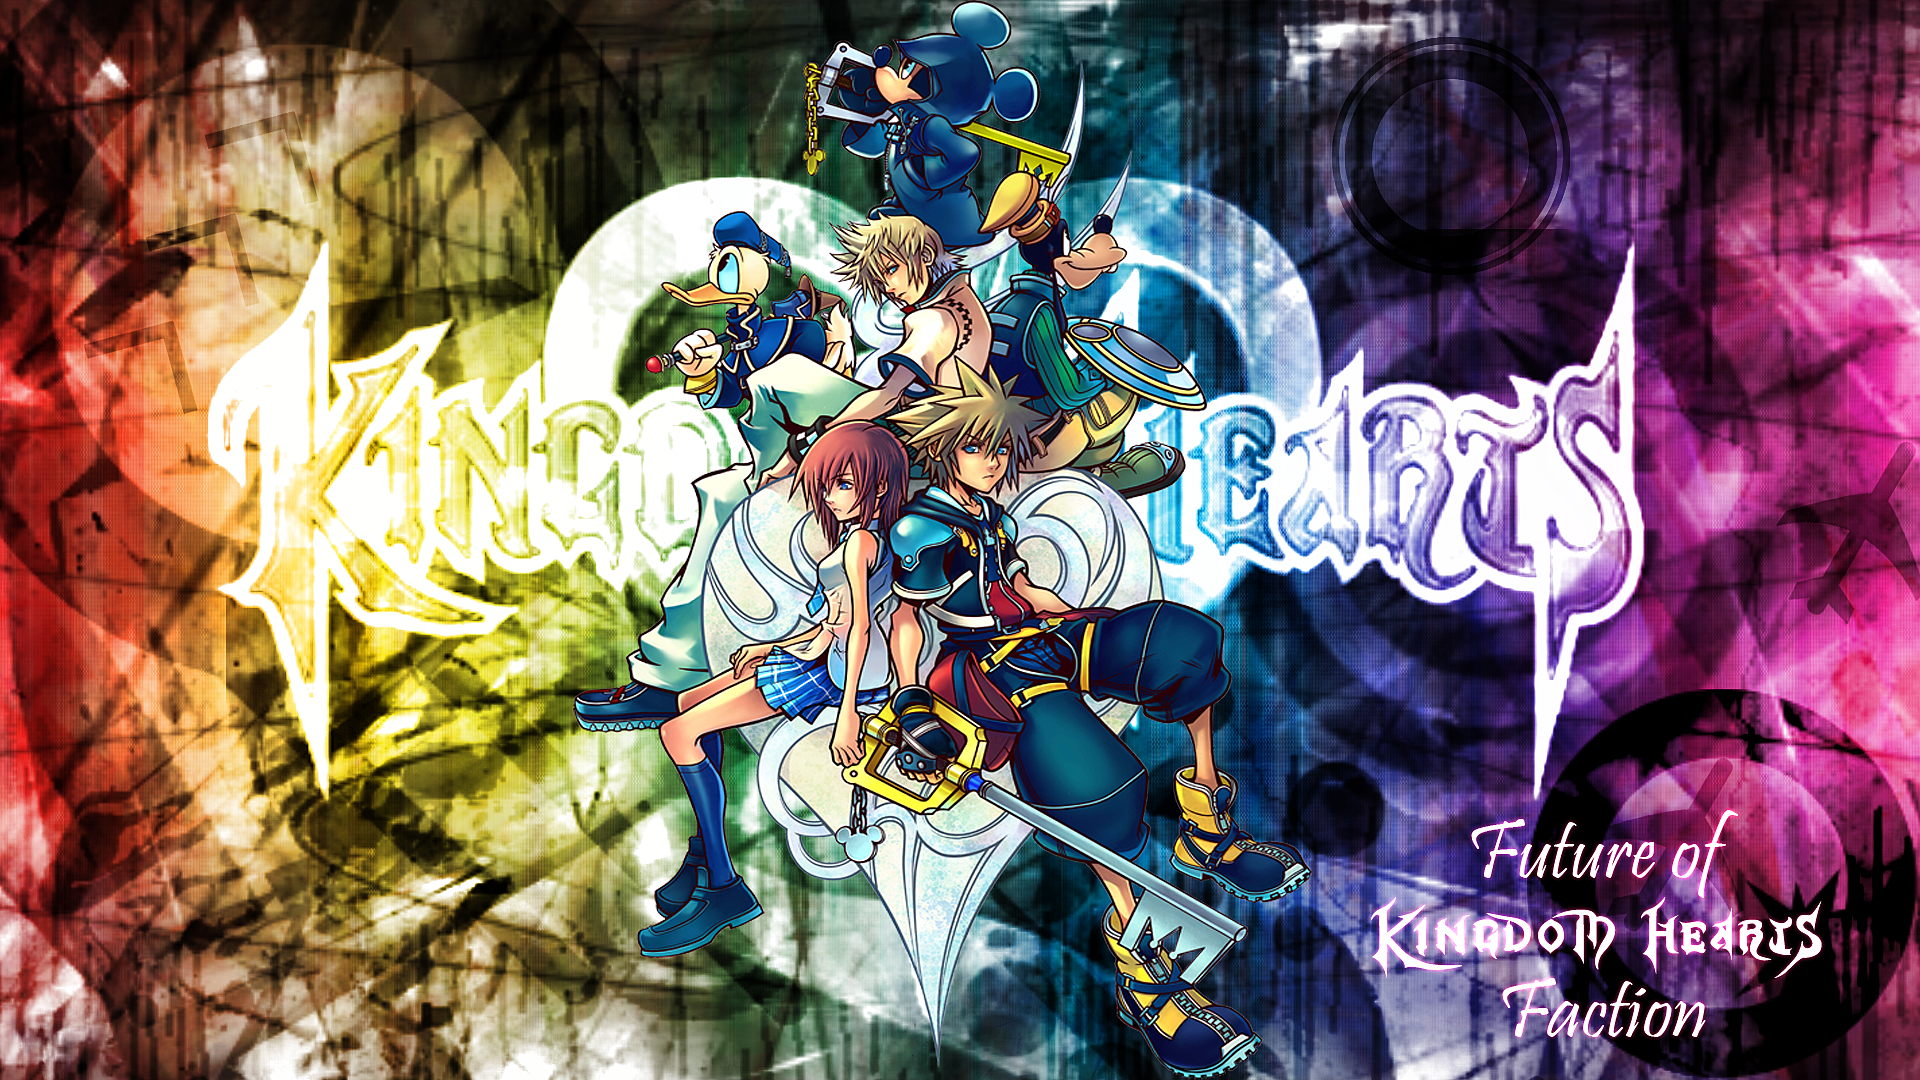 Kingdom hearts desktop wallpaper